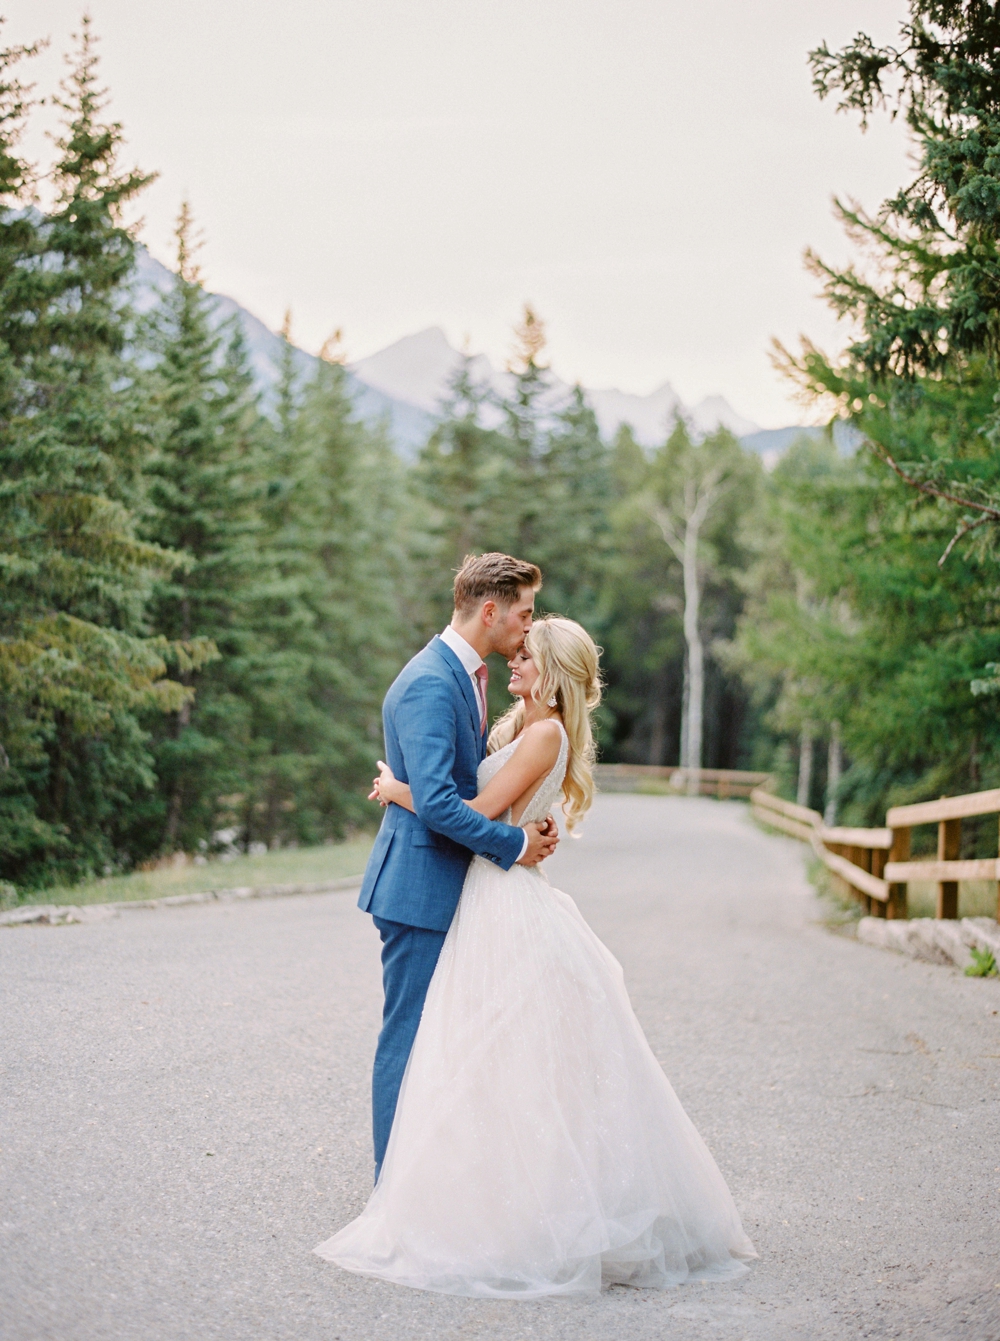 Bride and Groom portrait at Fairmont Banff Springs Hotel | Banff Rocky Mountain Wedding Photographers | Justine Milton fine art film photography